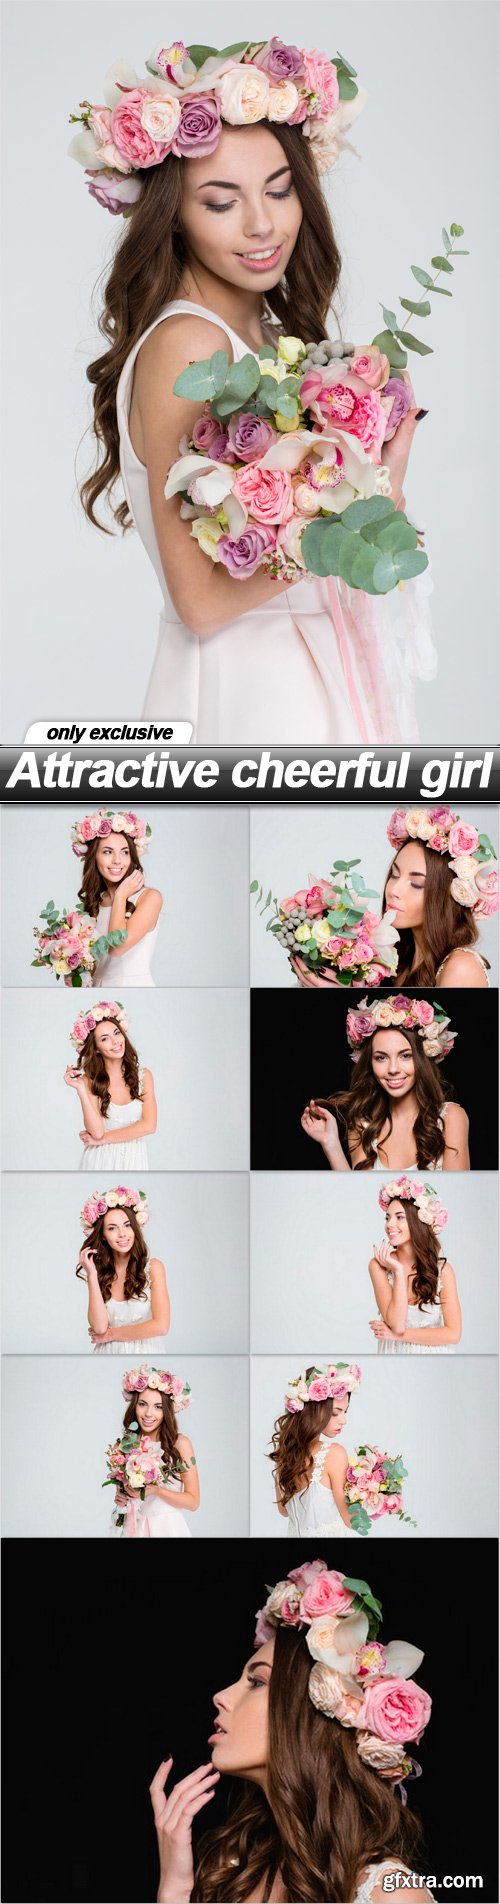 Attractive cheerful girl - 10 UHQ JPEG